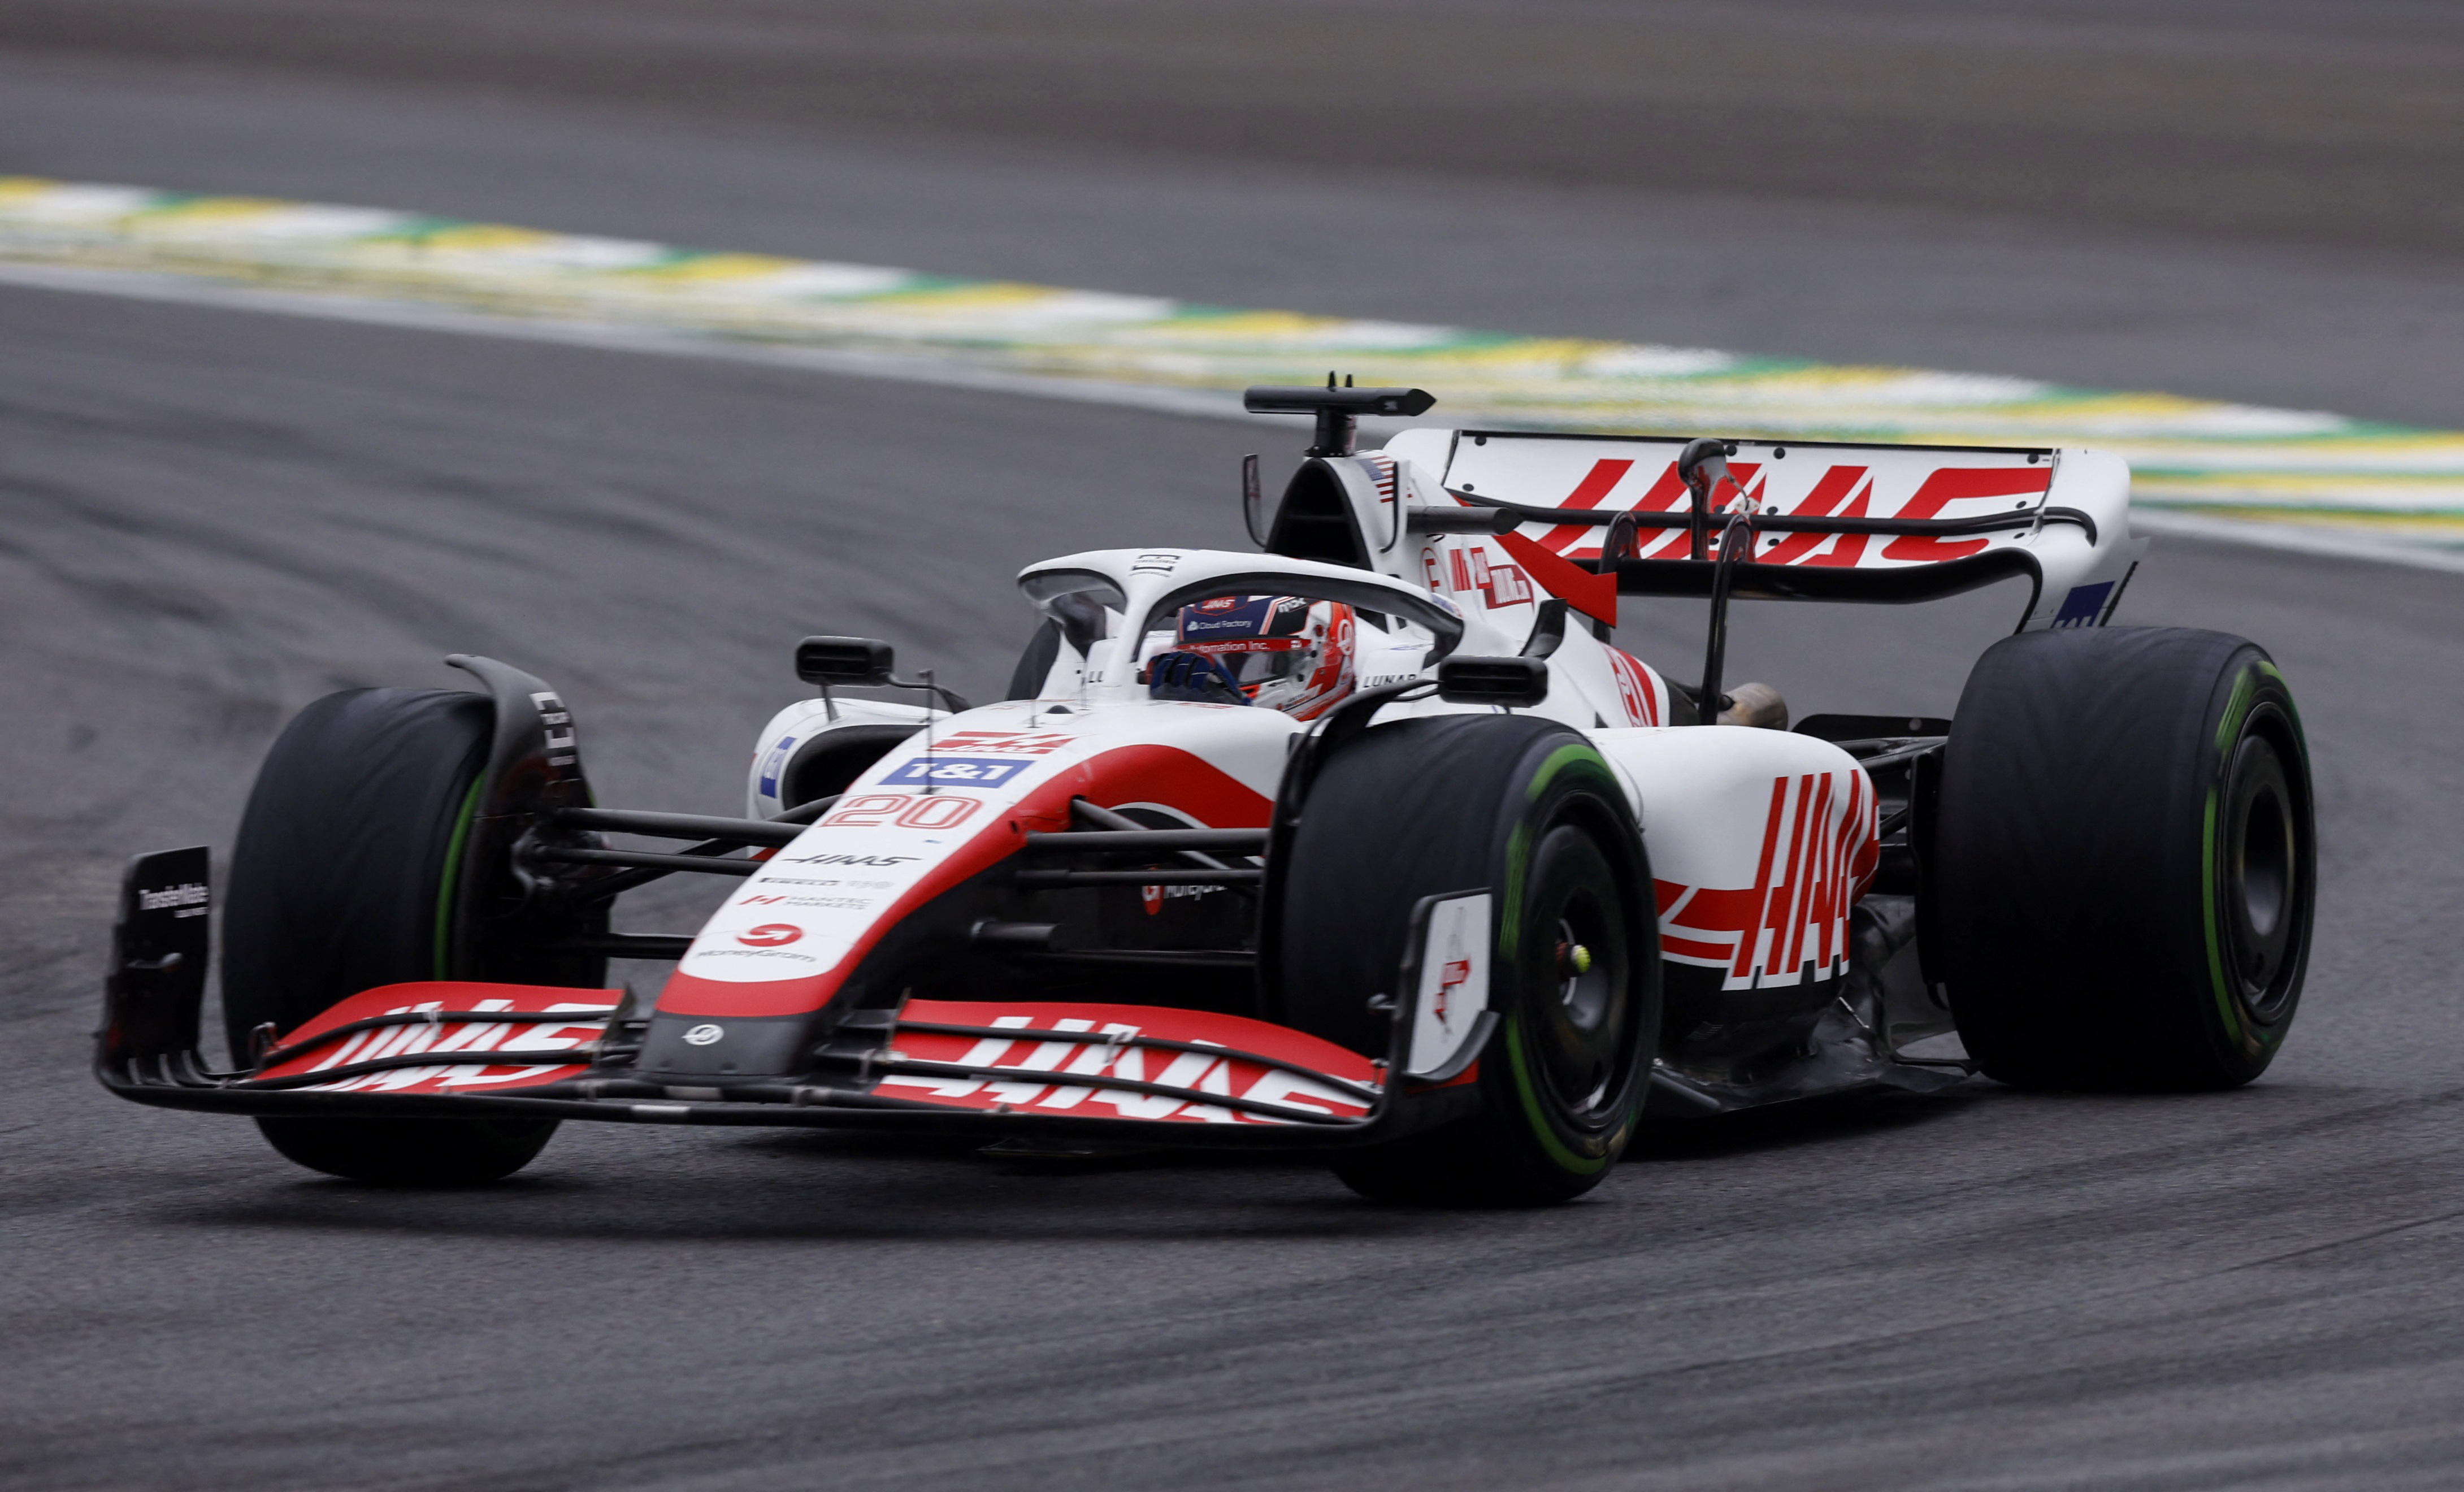 F1 – Verstappen grabs pole in São Paulo ahead of Leclerc as